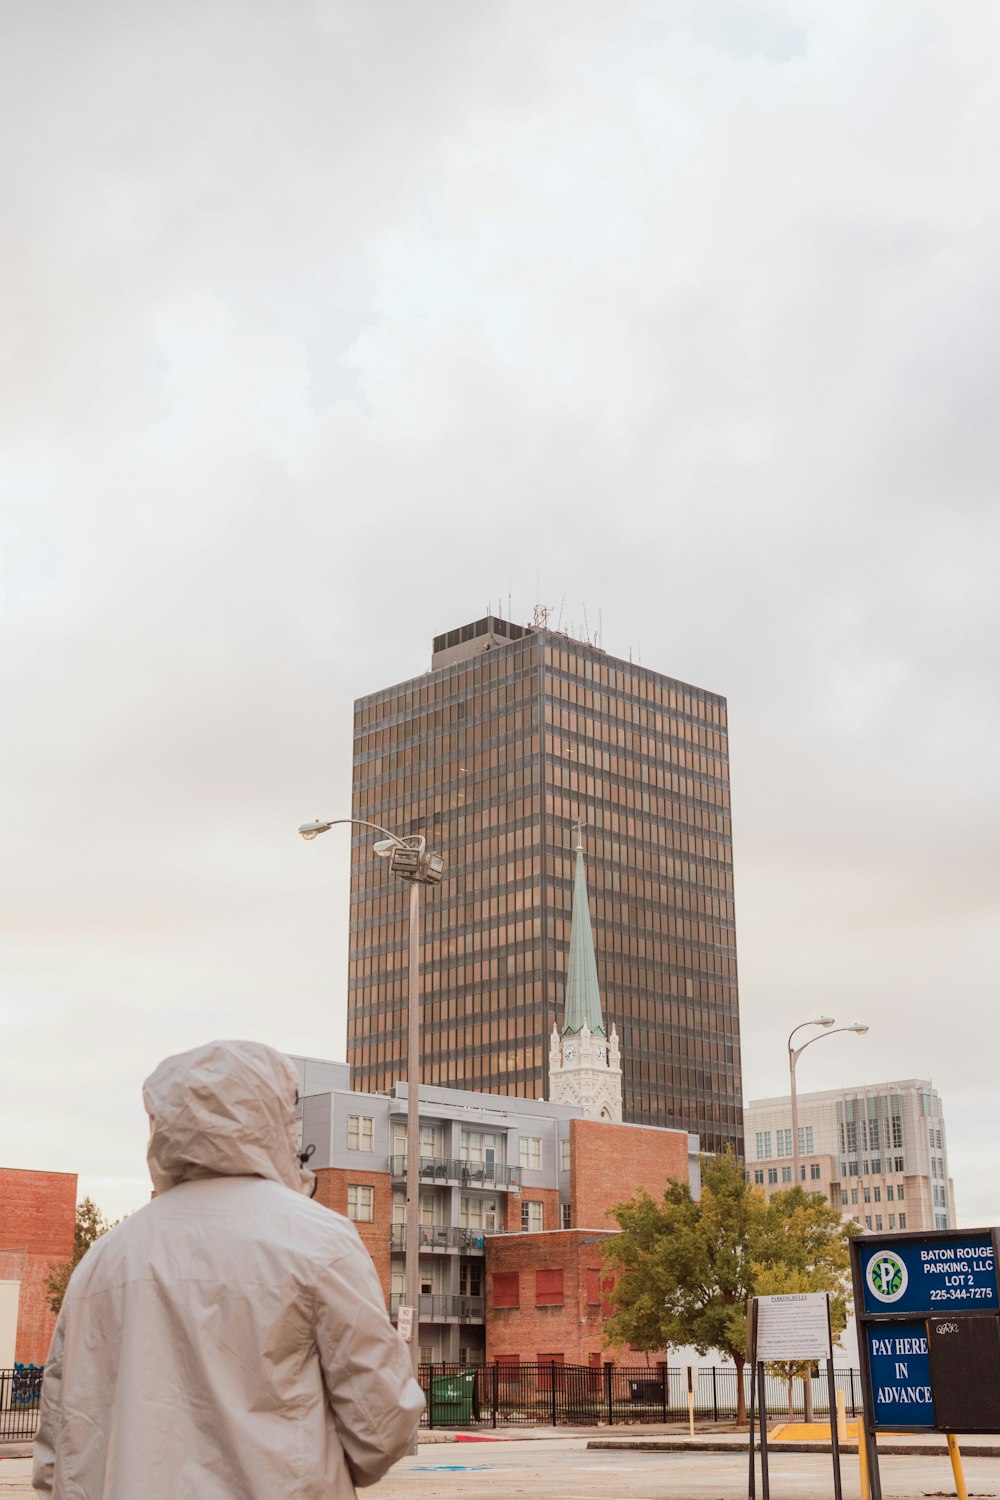 Una persona parada frente a un edificio alto